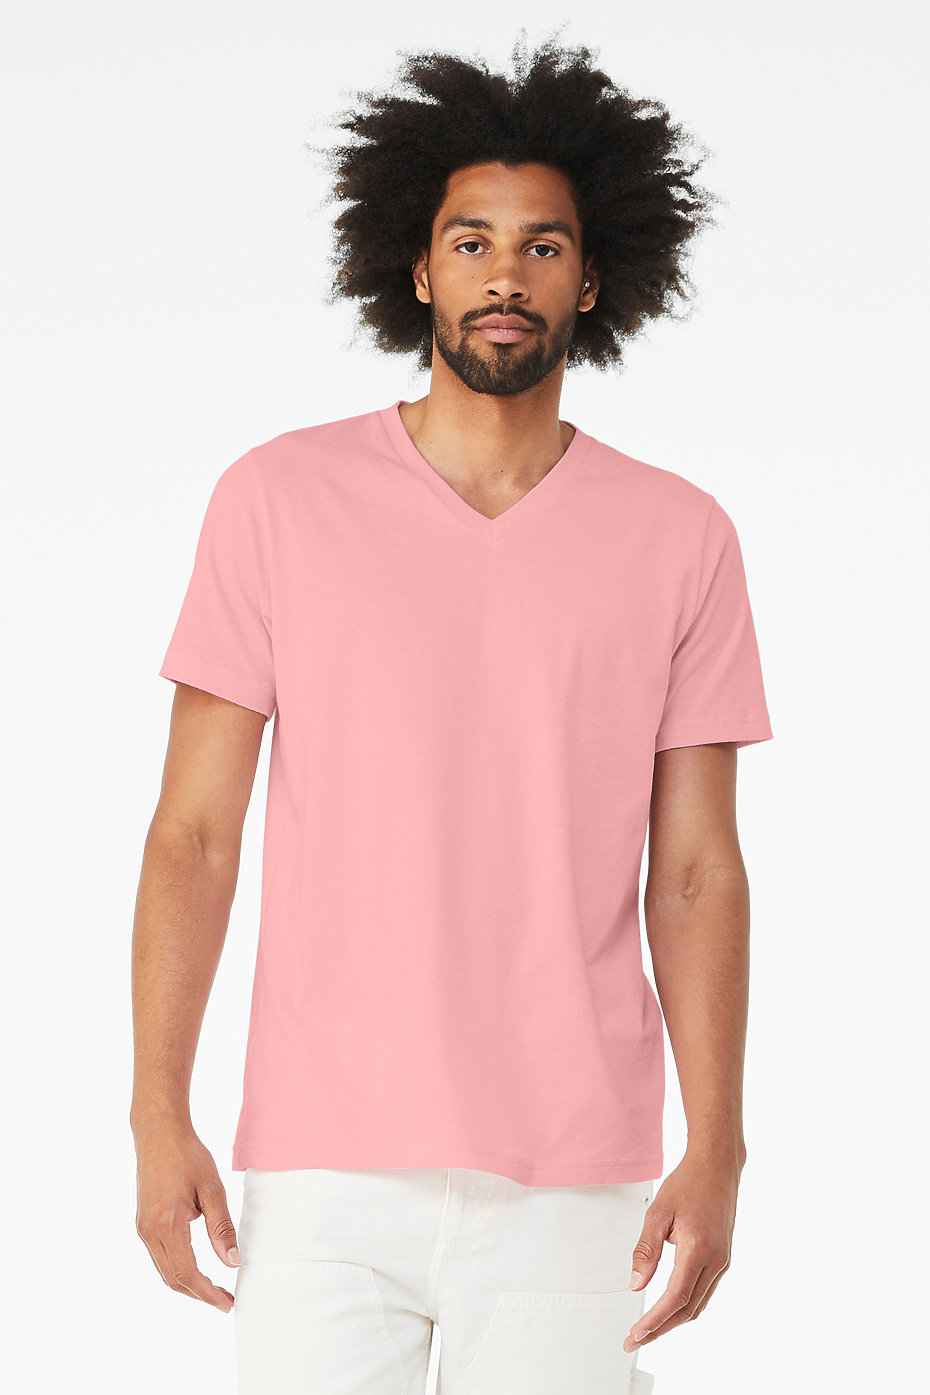 dealer Wegrijden Vooruitgang V Neck T Shirts For Men | Unisex Jersey T Shirt | Mens Wholesale Clothing |  Bulk T Shirts | BELLA+CANVAS ®